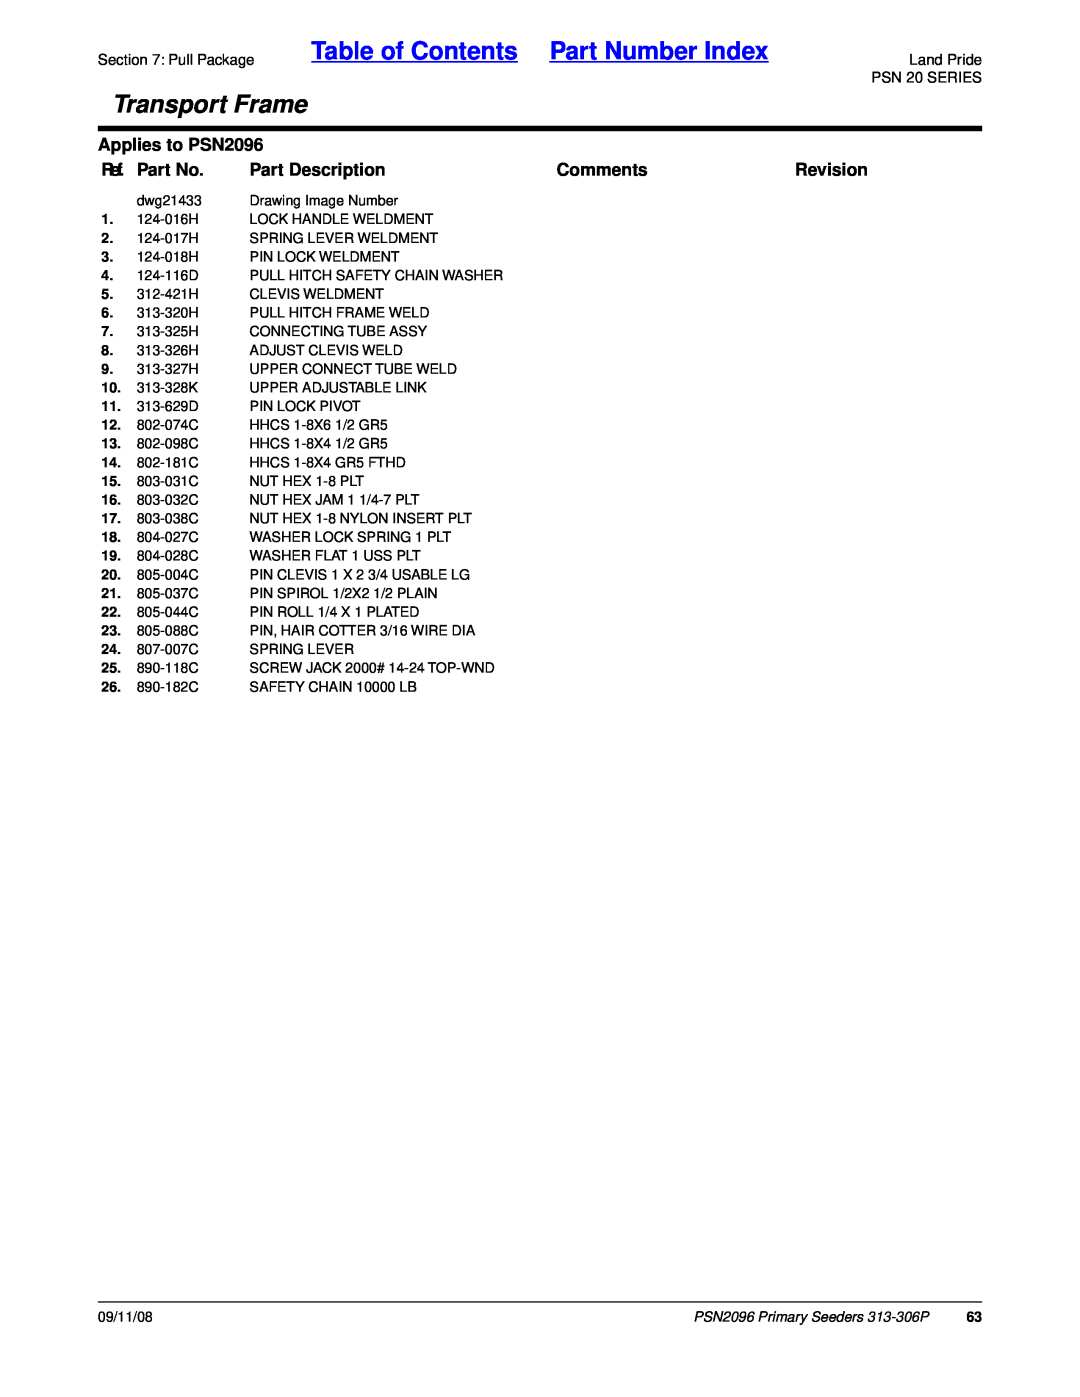 Land Pride Table of Contents Part Number Index, Transport Frame, Applies to PSN2096, Ref. Part No, Part Description 